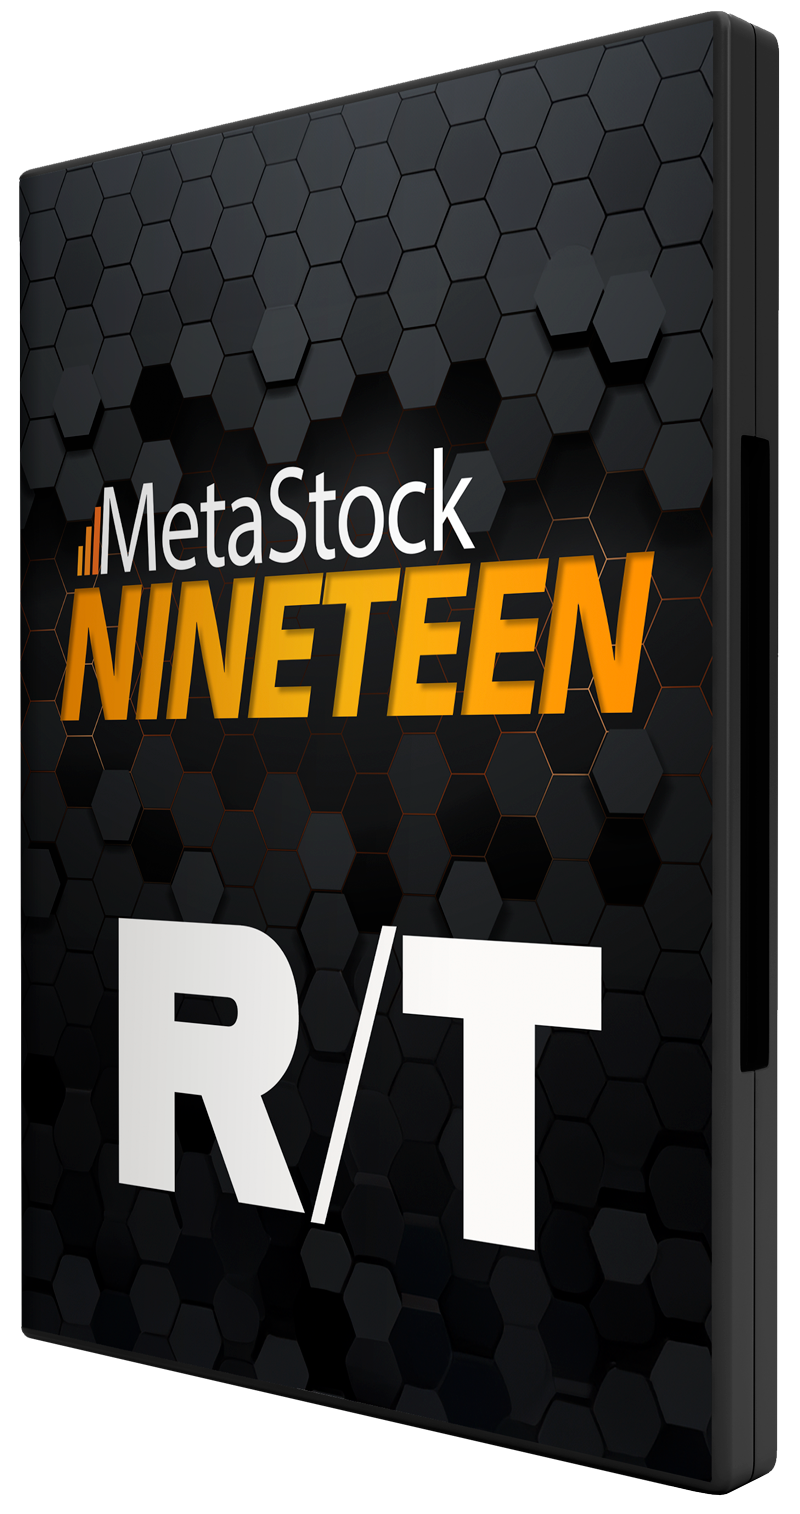 Metastock 19 R/T